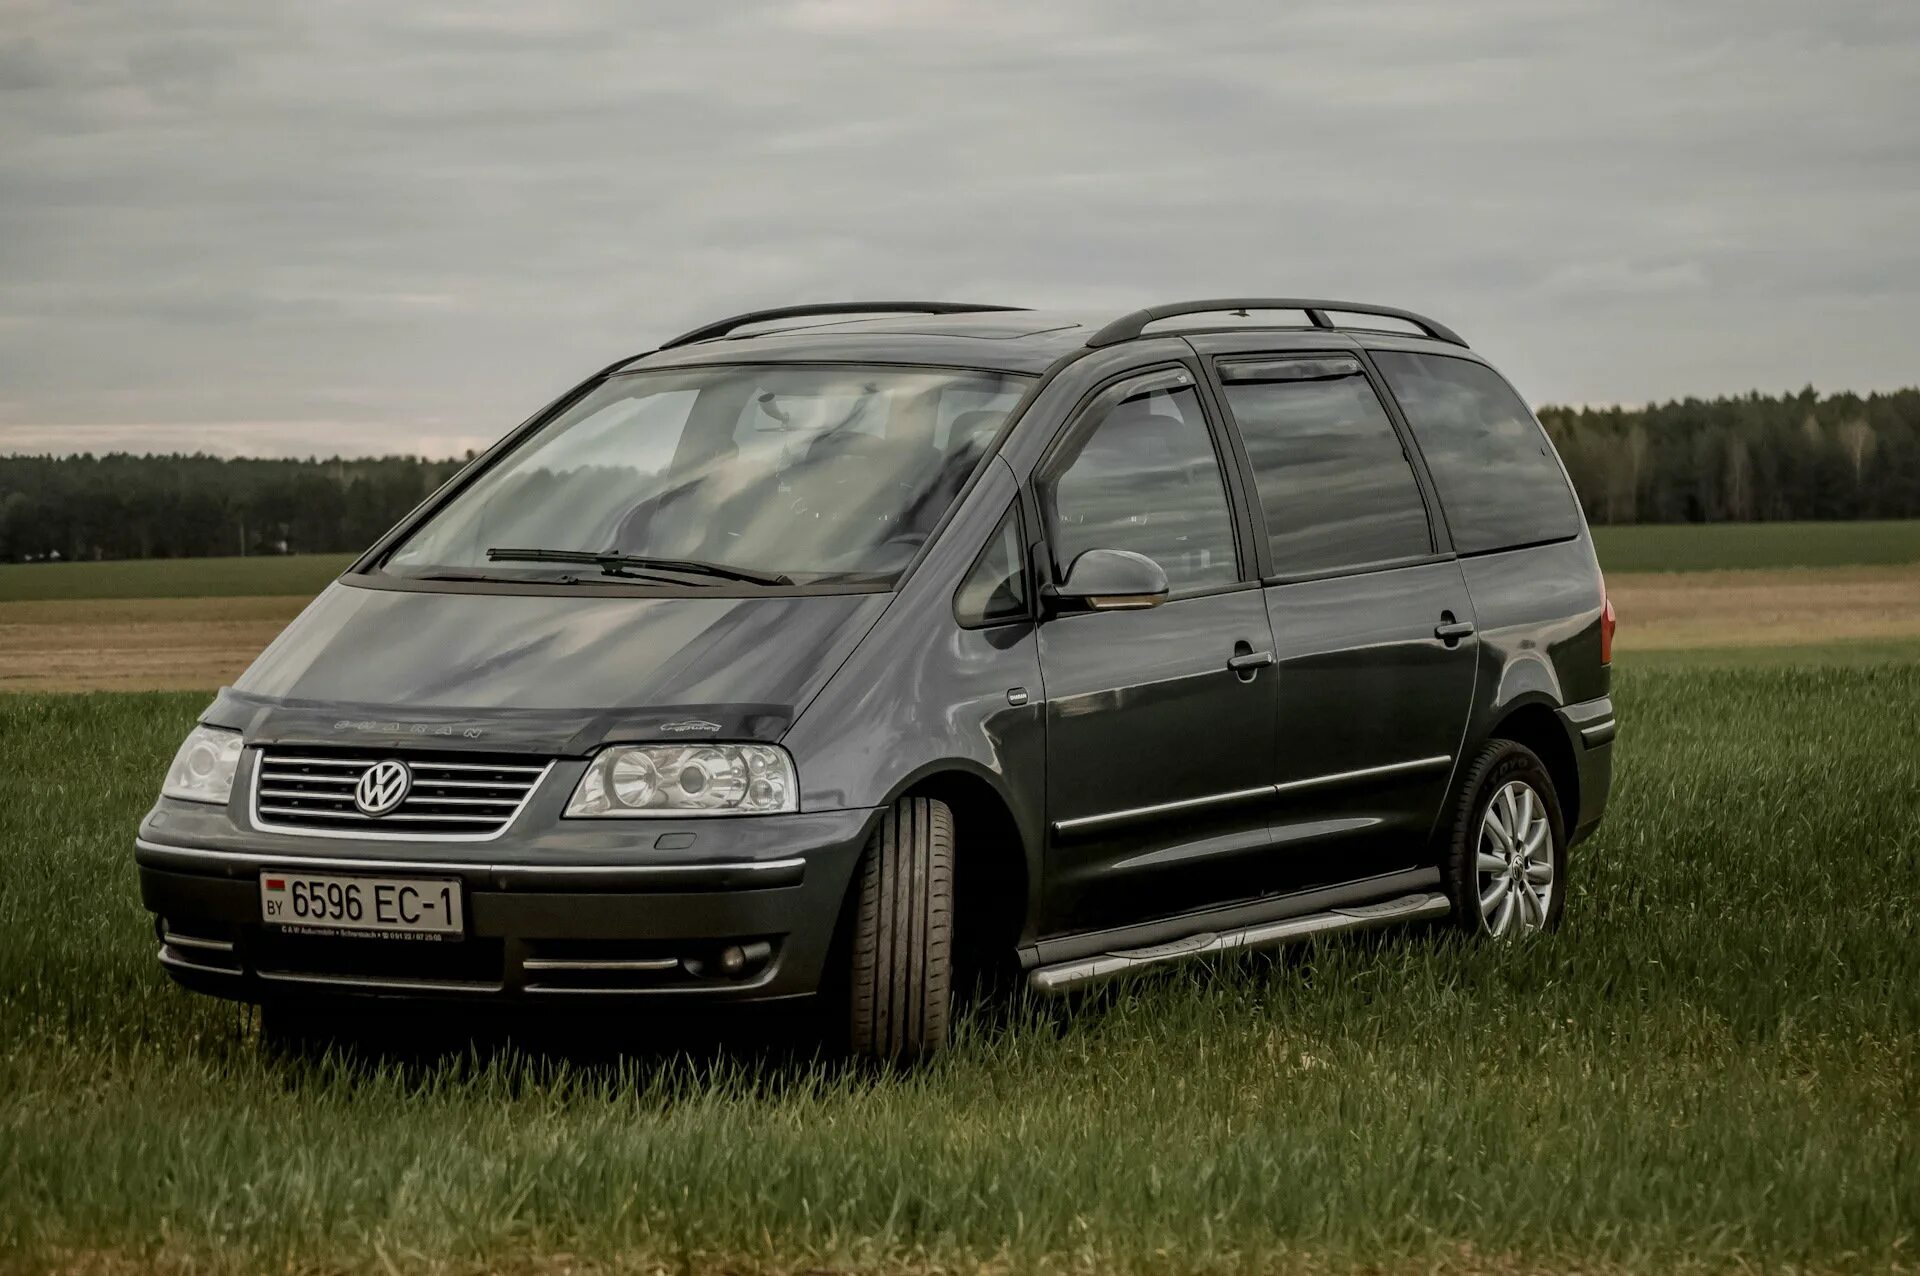 Volkswagen Sharan i 1998. Volkswagen Sharan 1.9 (150 л.с.). Фольксваген Шаран 200. Фольксваген Шаран 2008.